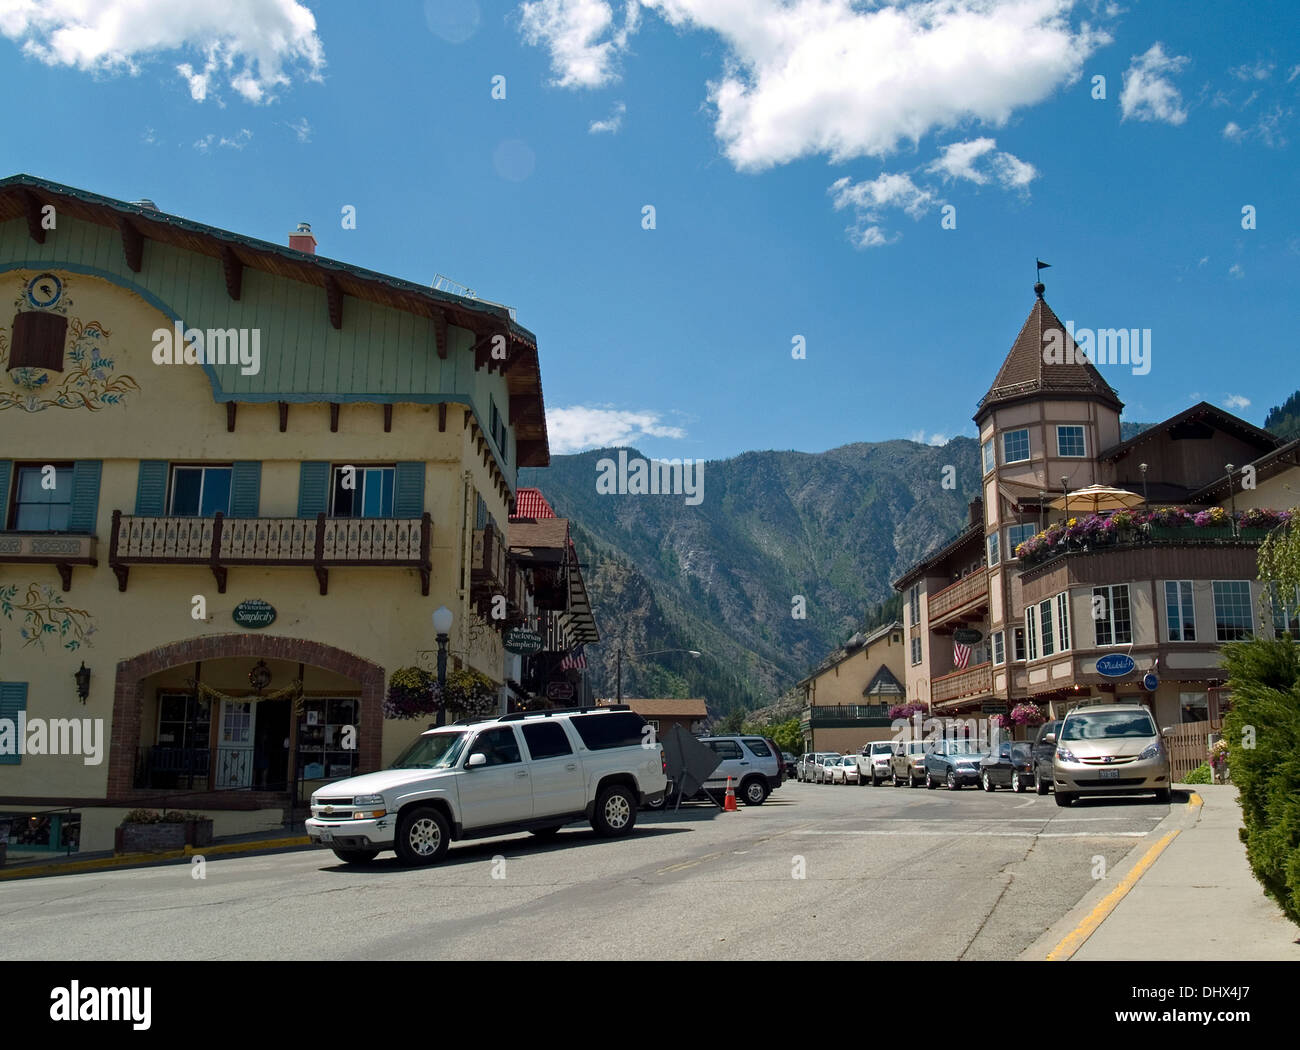 The main street of the Bavarian town of Leavenworth,Washington State Stock Photo